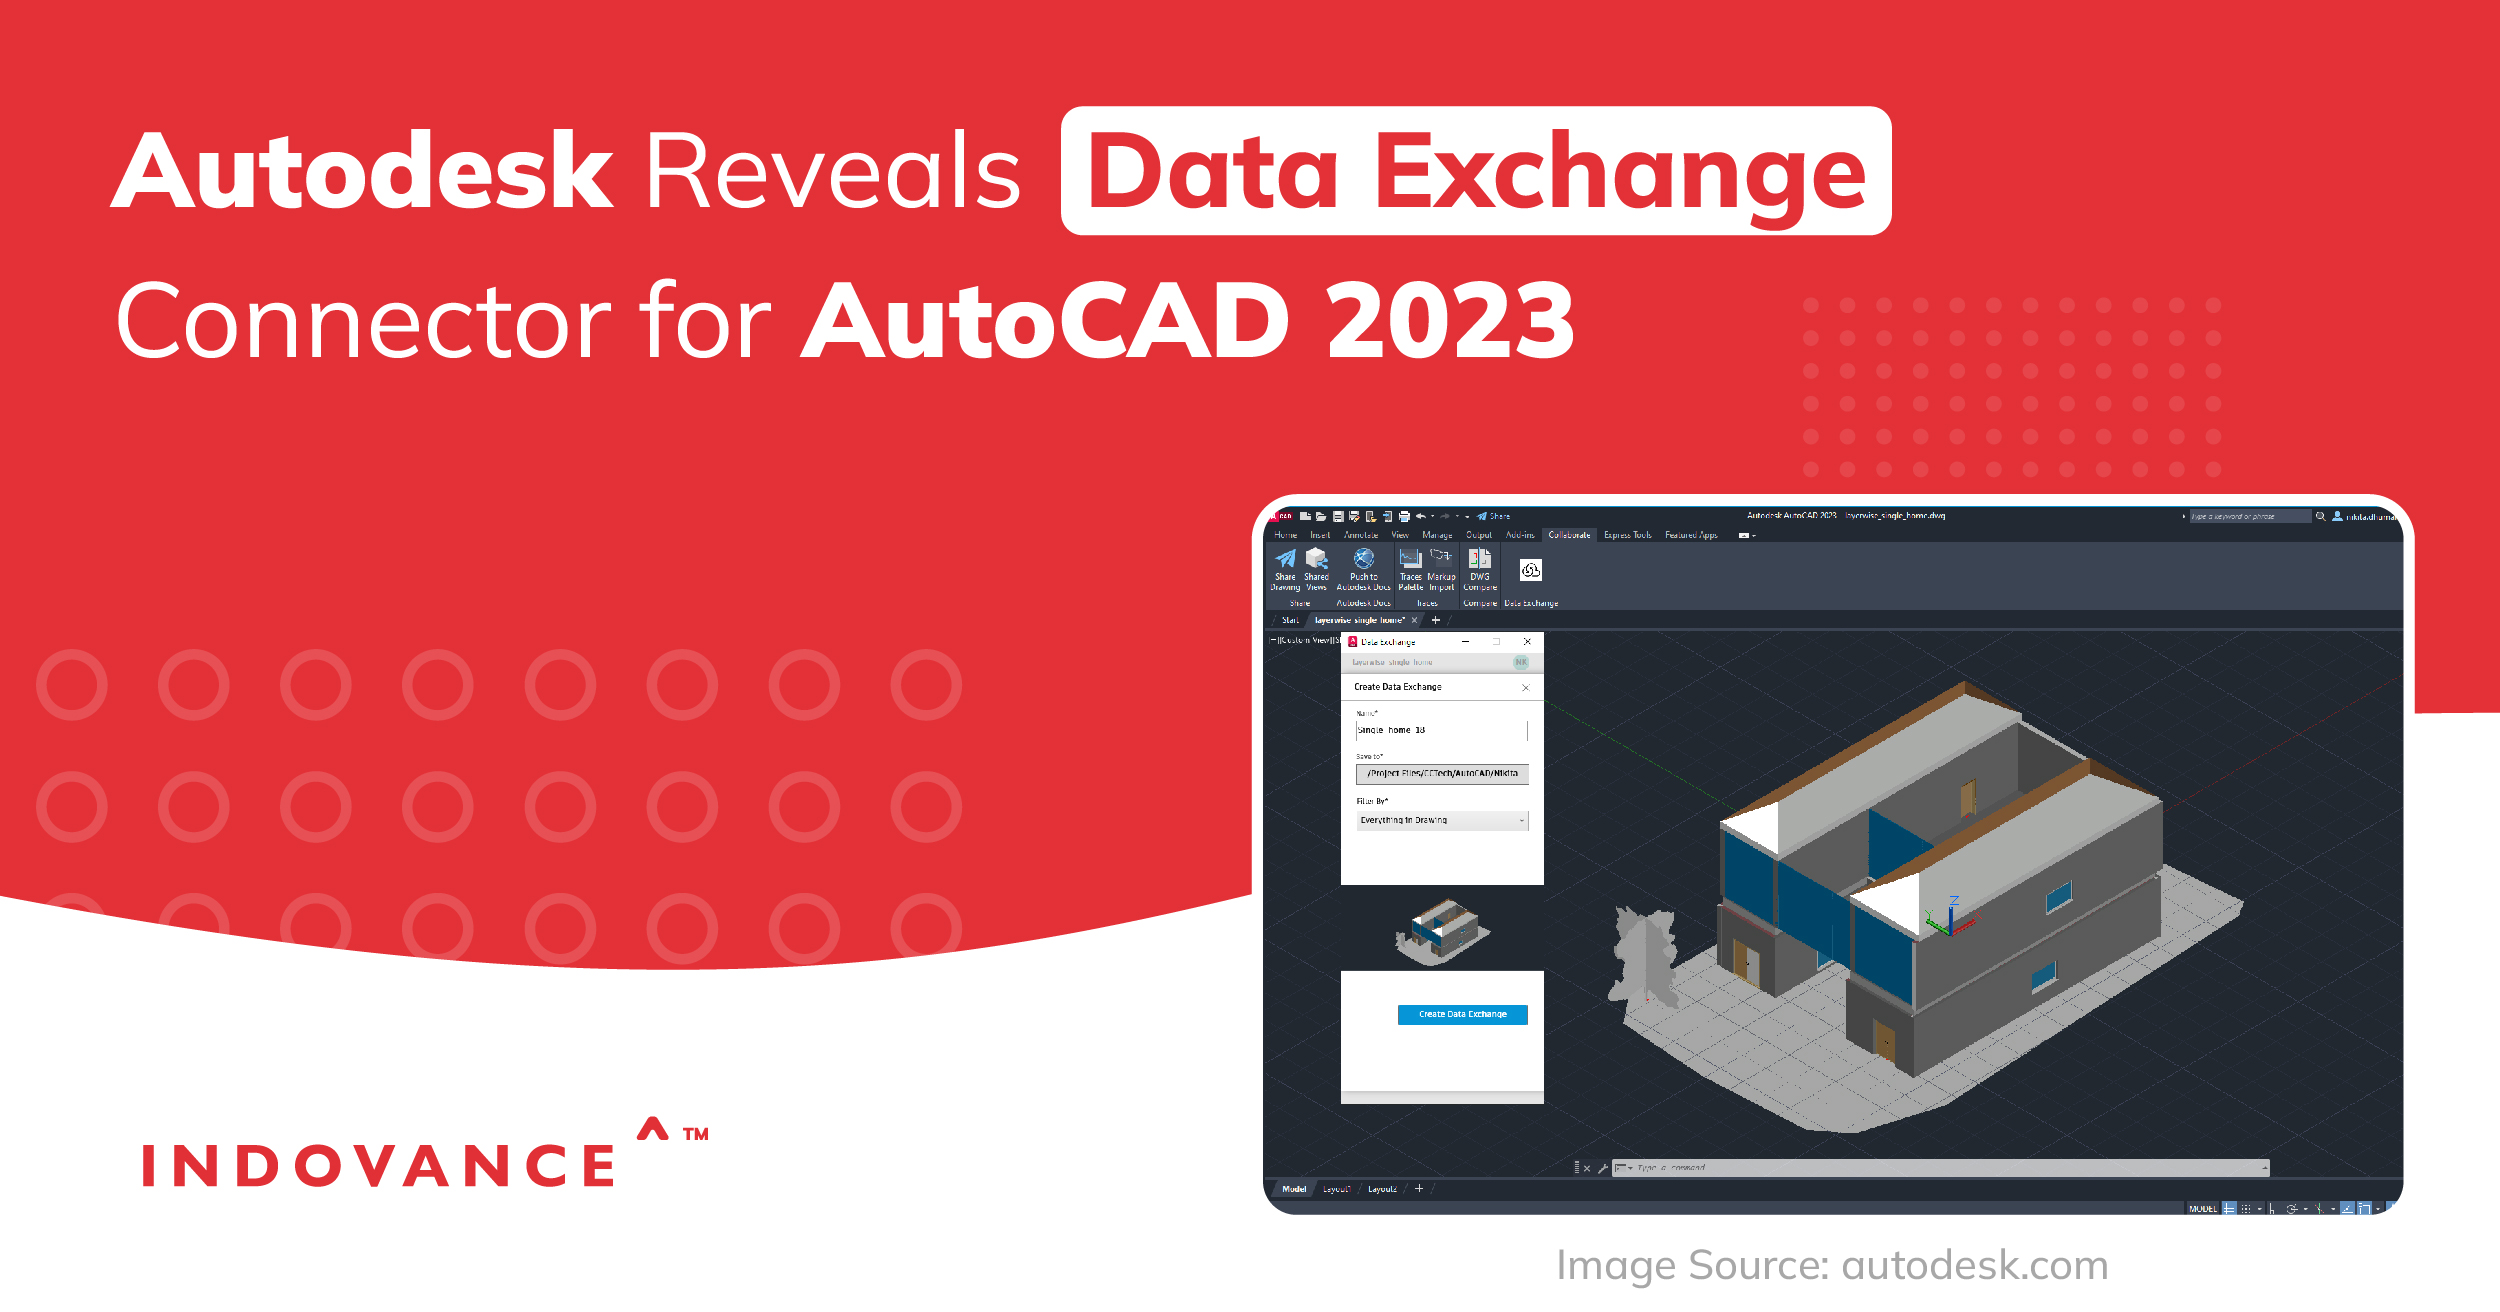 Autodesk Reveals Data Exchange Connector for AutoCAD 2023